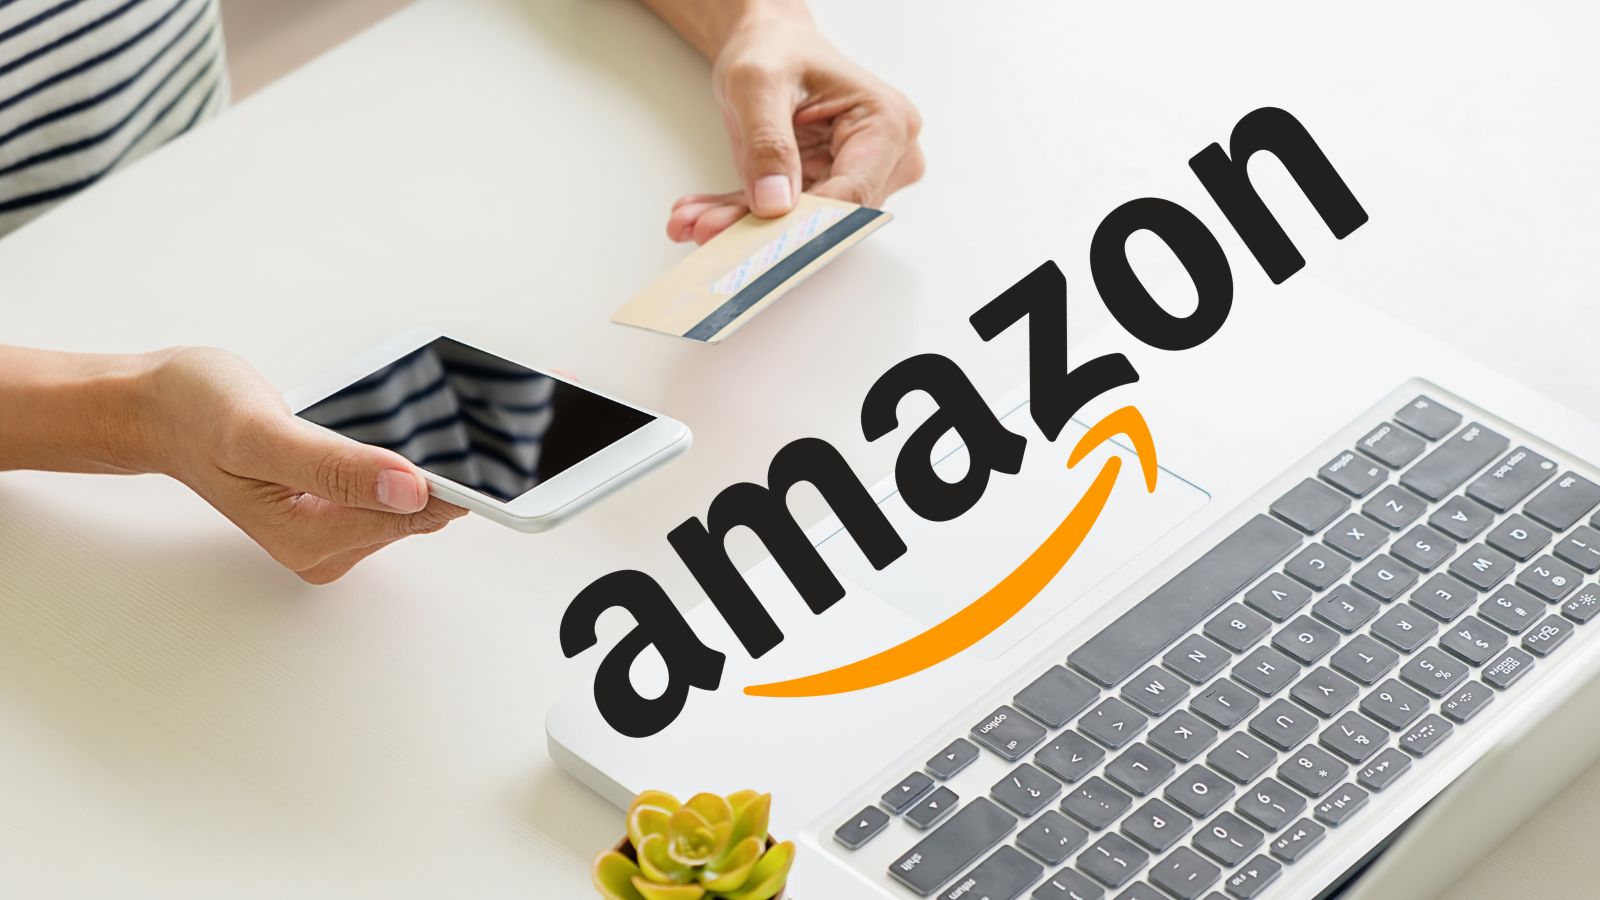 Amazon SPAVENTOSA: annienta Unieuro con tecnologia e smartphone GRATIS 